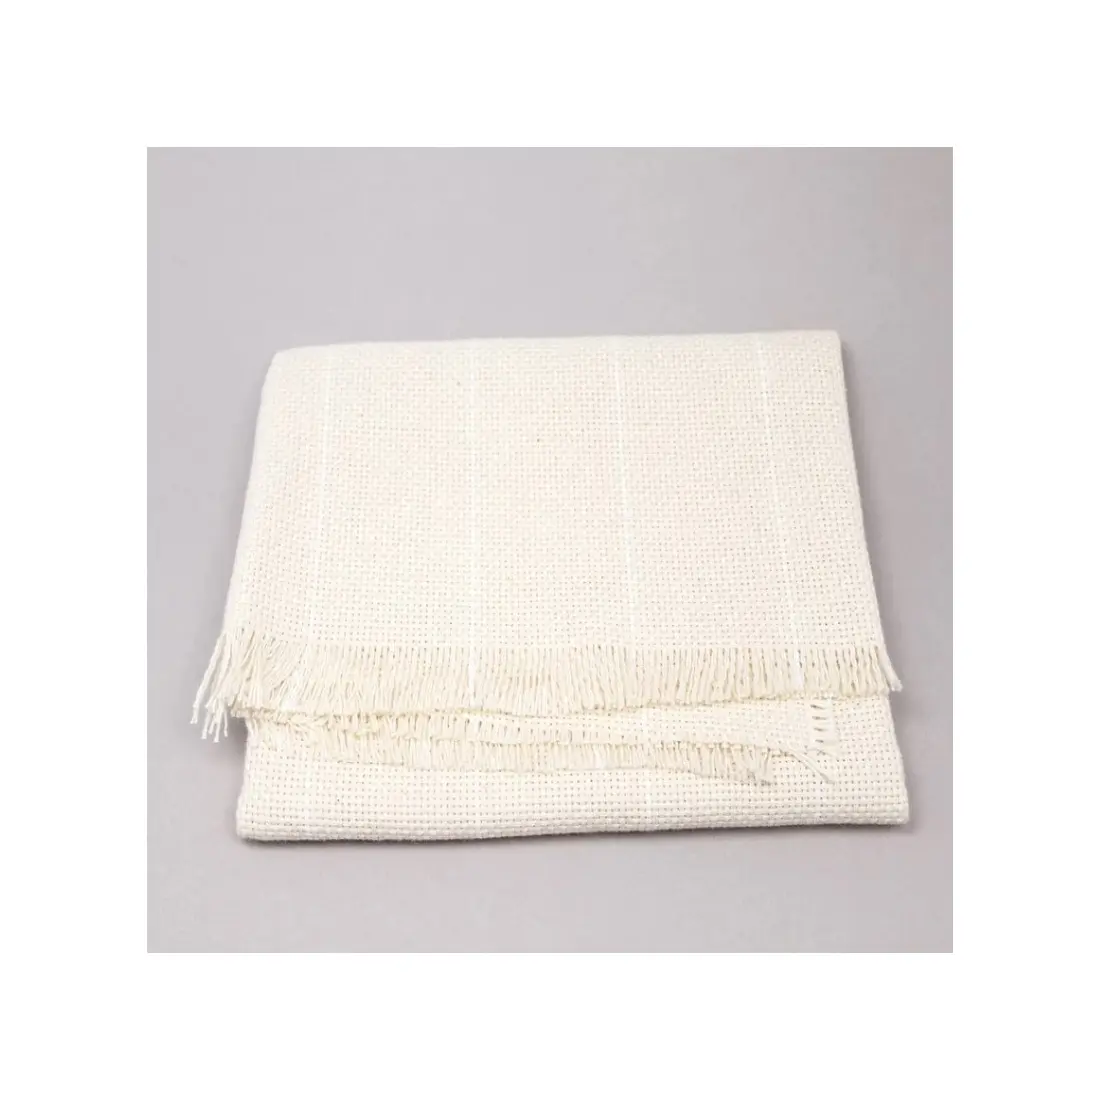 100% algodón monjes tela Tufting alfombra punzón aguja tela alfombra enganche bordado fabricado en India reutilizable